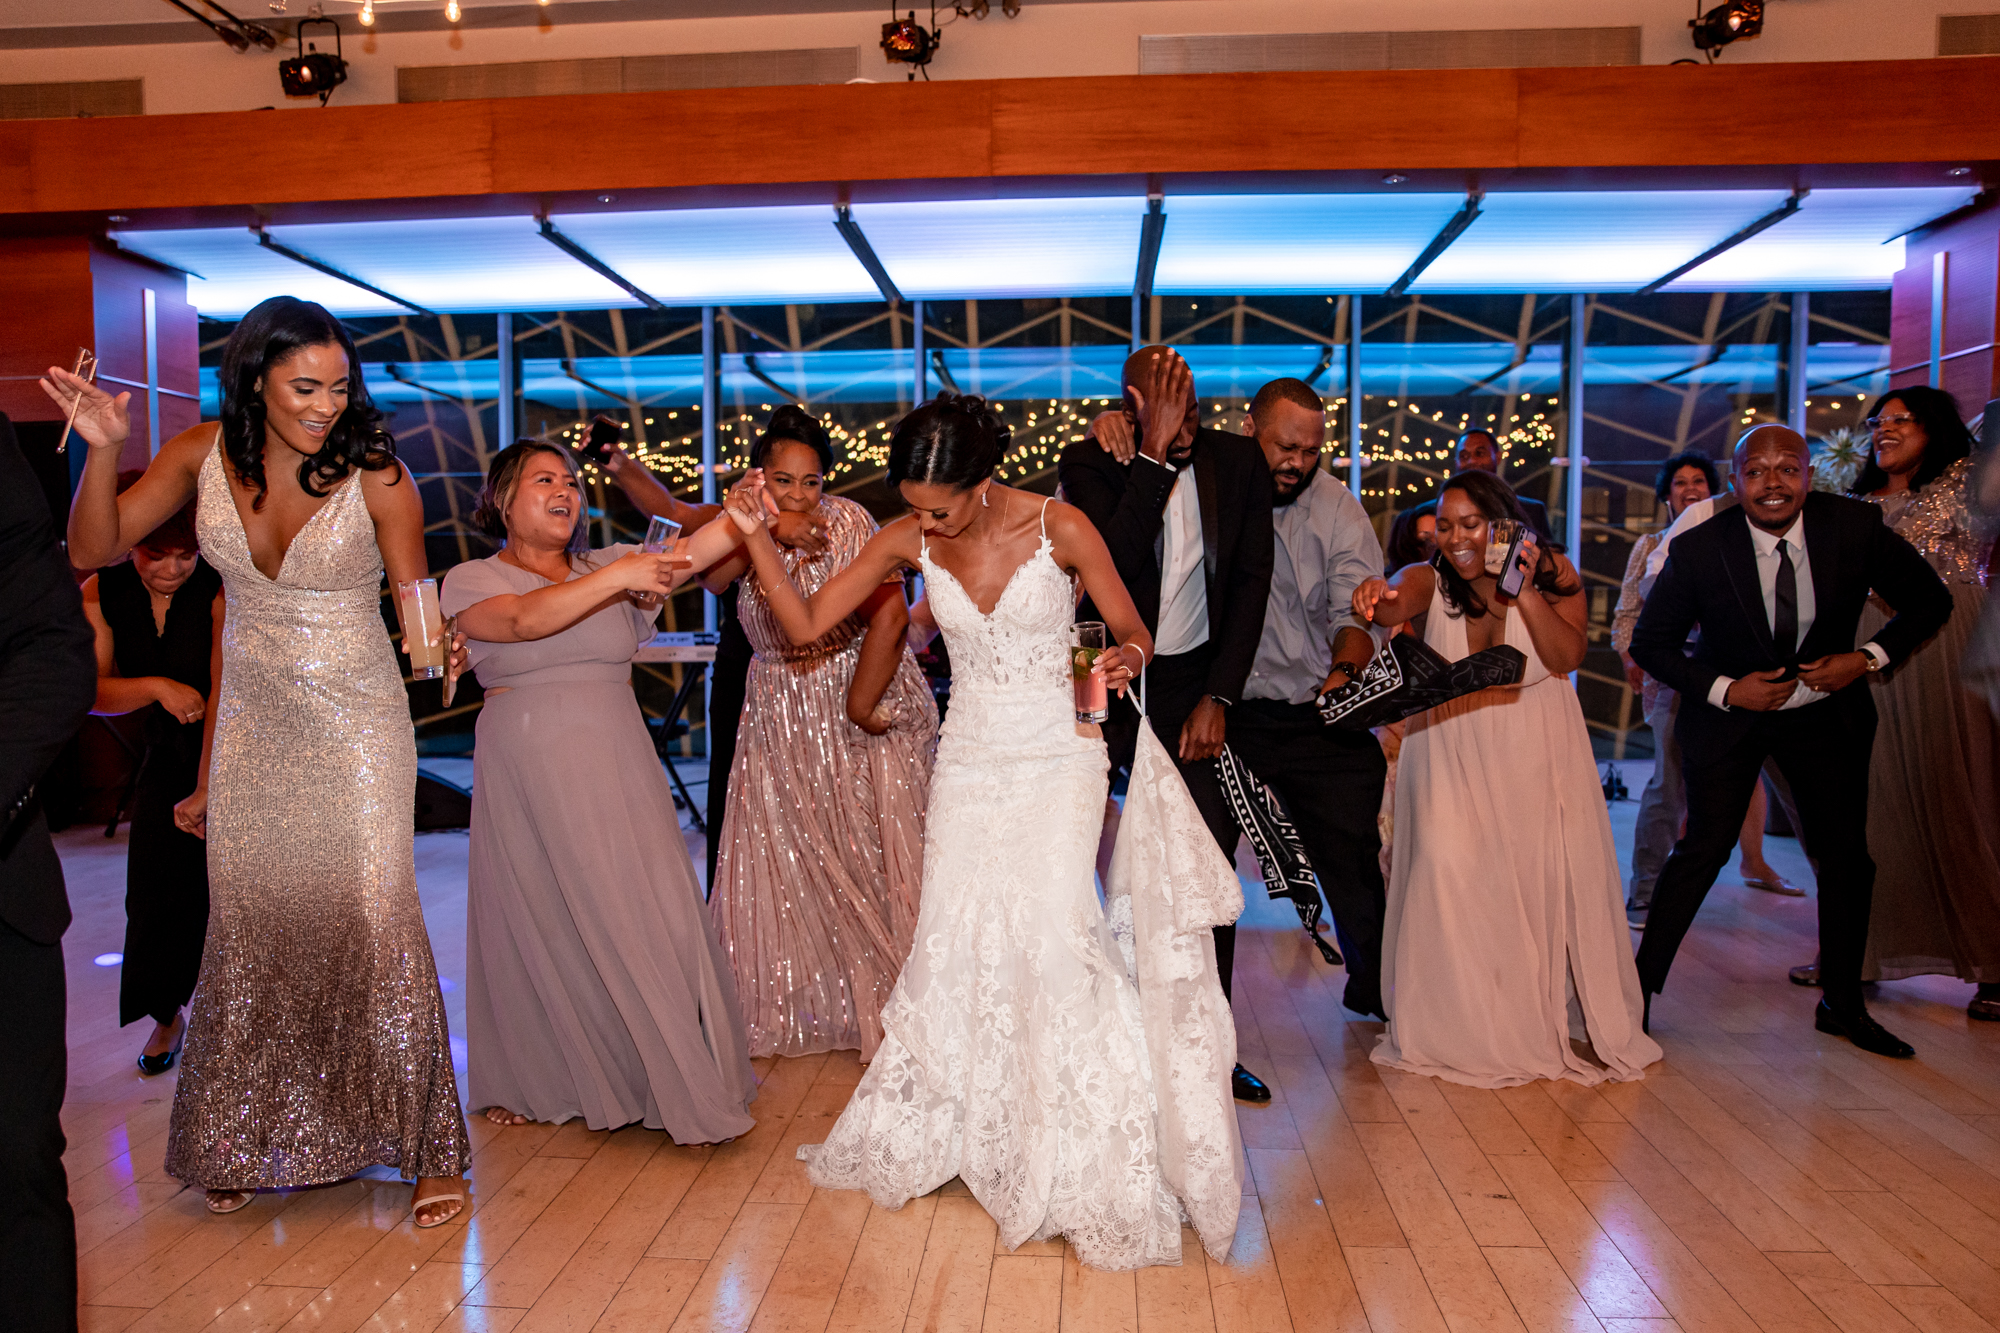 scenes from a kimmel center wedding reception